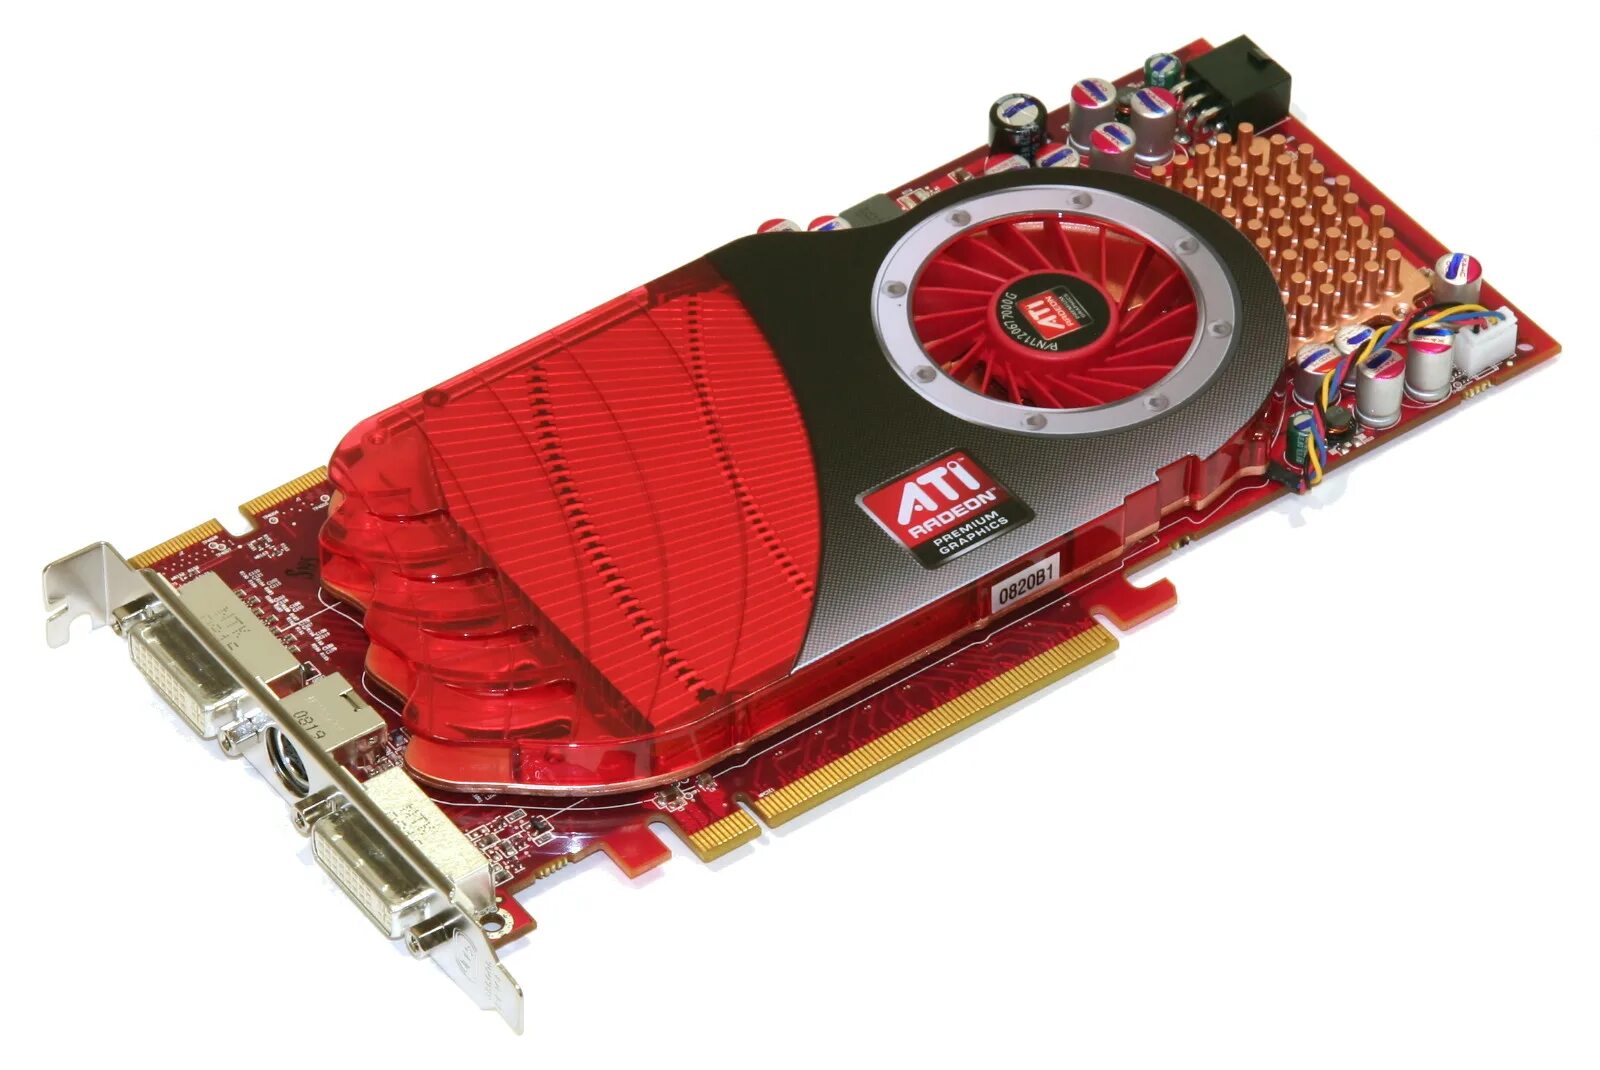 Ati radeon. Видеокарта АМД 4870. Видеокарта ATI Radeon HD 4870. Видеокарта AMD Radeon HD 4800. ATI Radeon HD 4800 Sapphire.